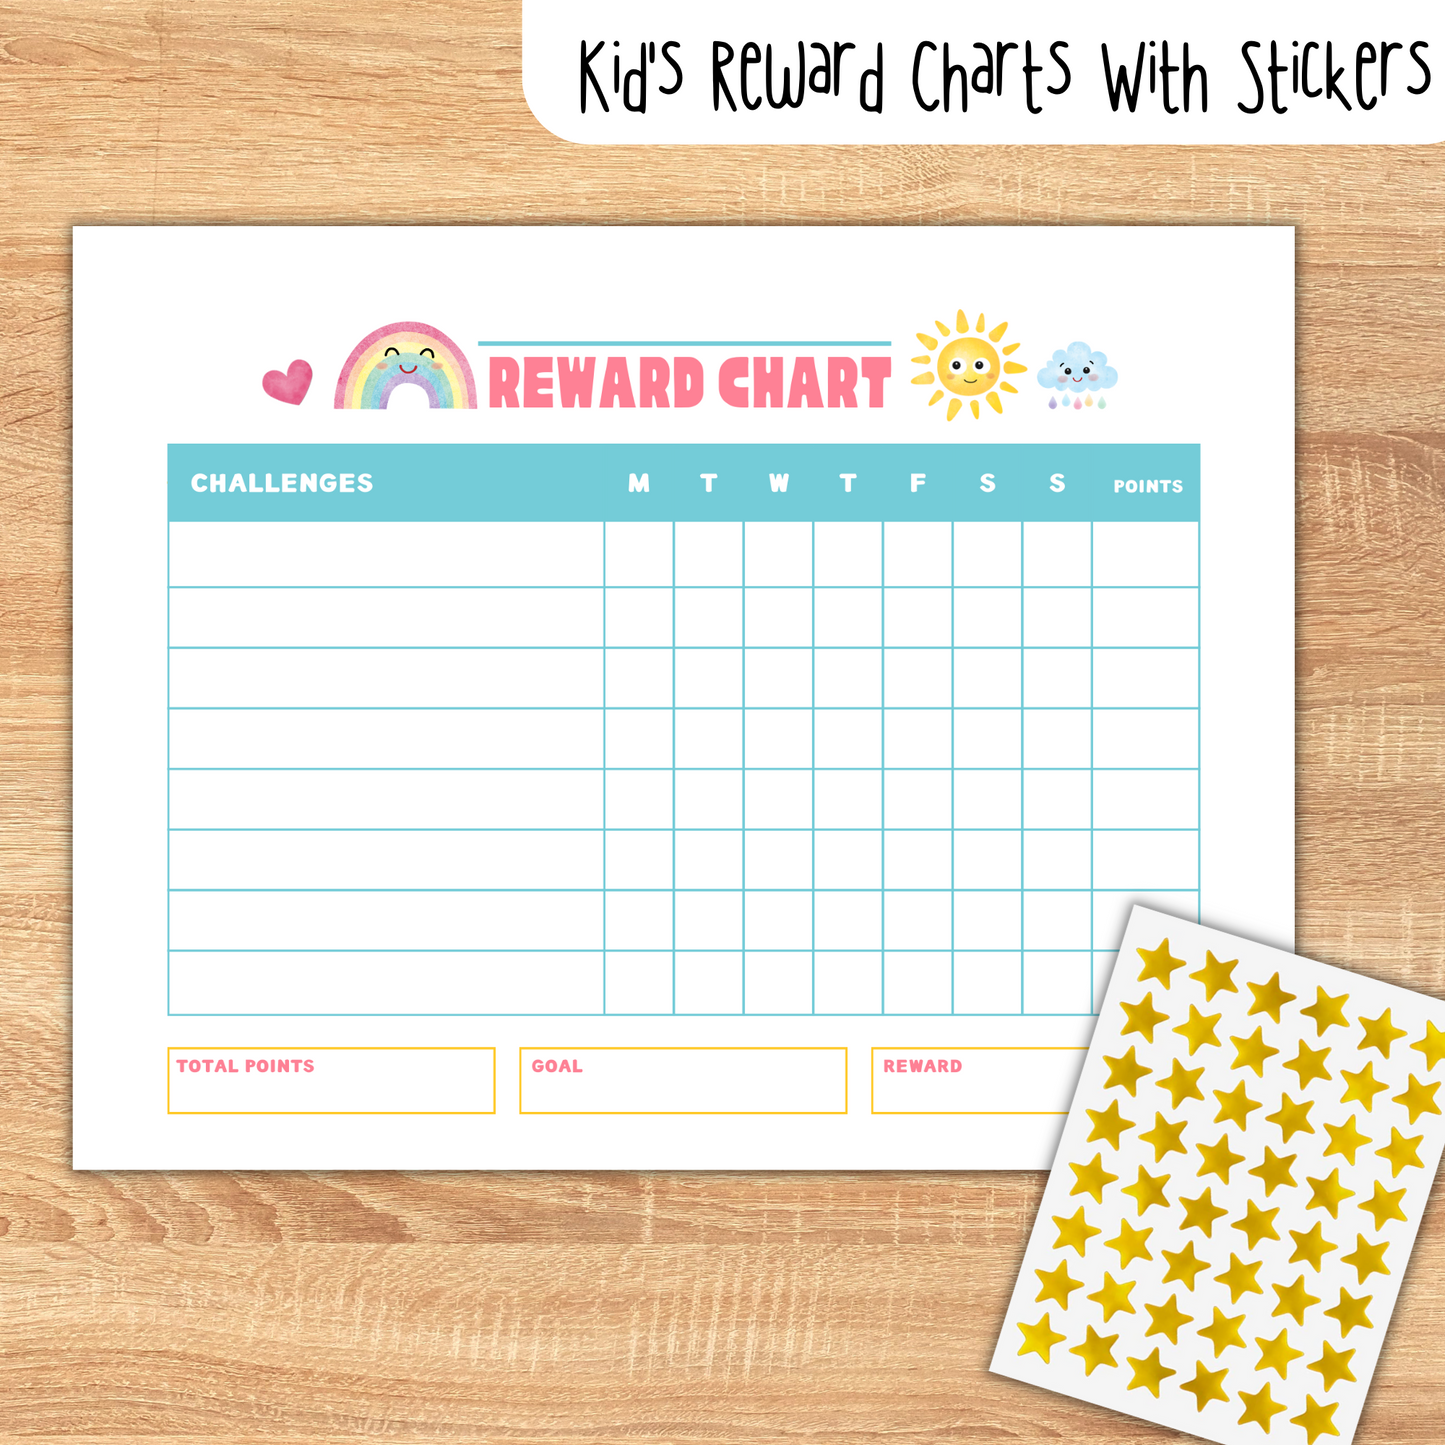 Kid's Reward Charts With Stickers